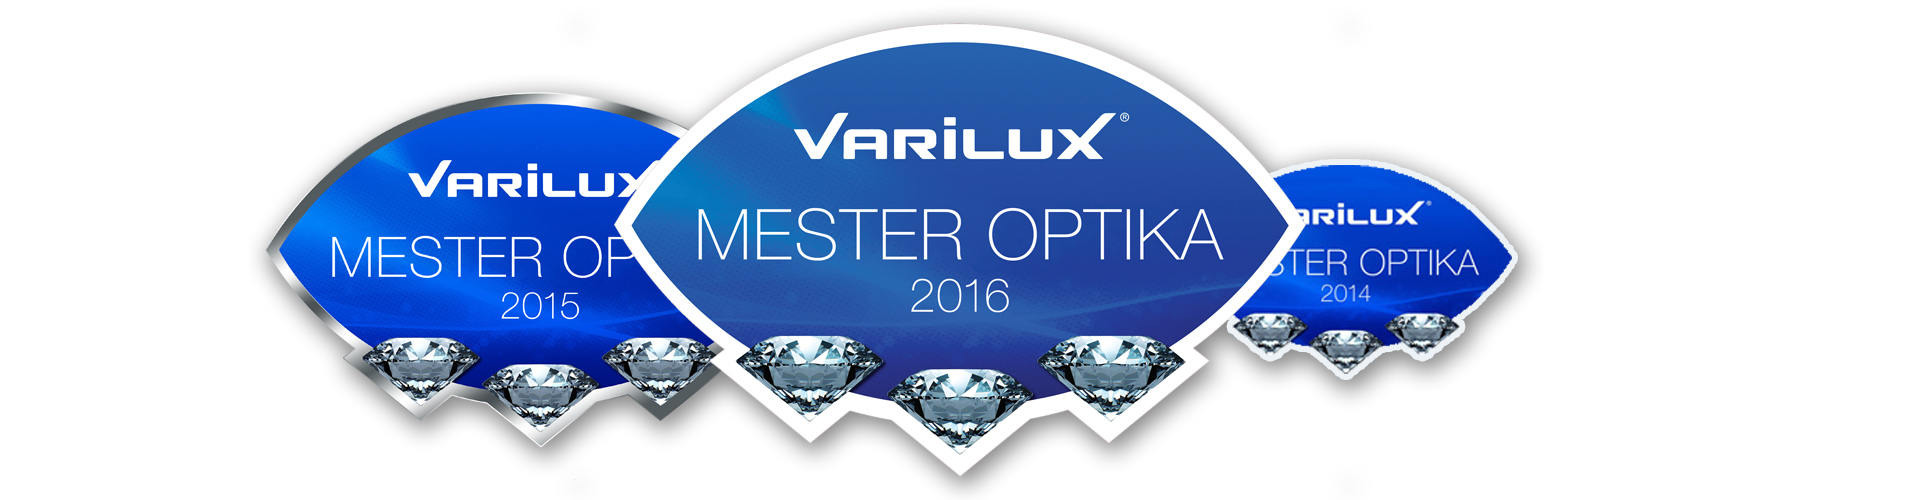 Varilux Mester